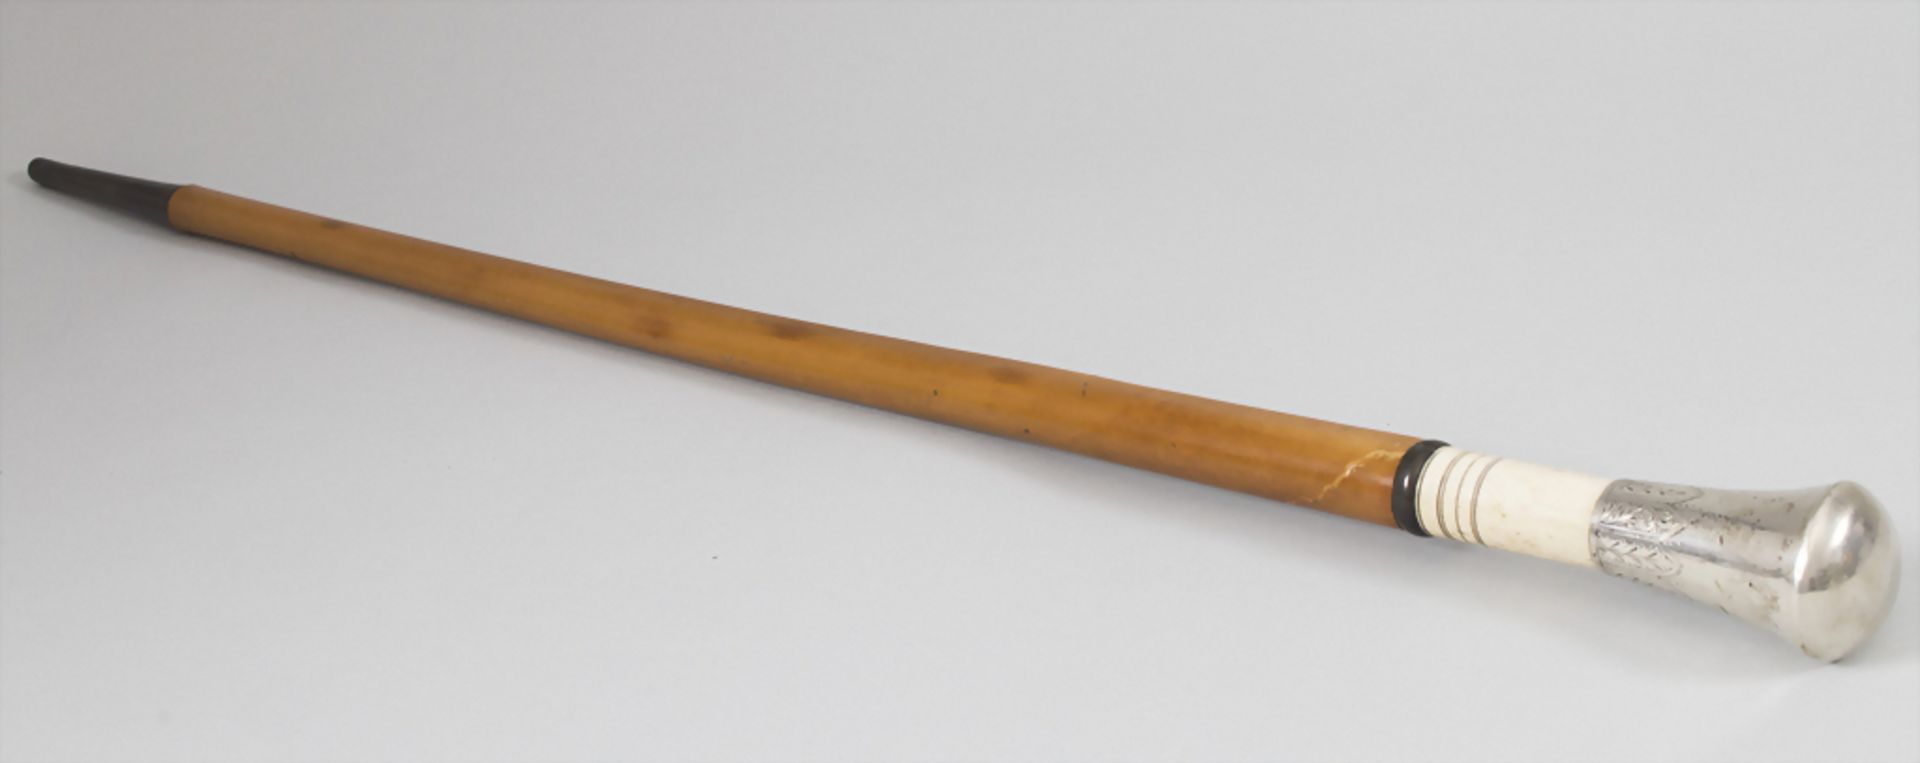 Spazierstock / A walking stick / cane, um 1900Material: Silber, Horn, Elfenbein, Malak - Image 3 of 3